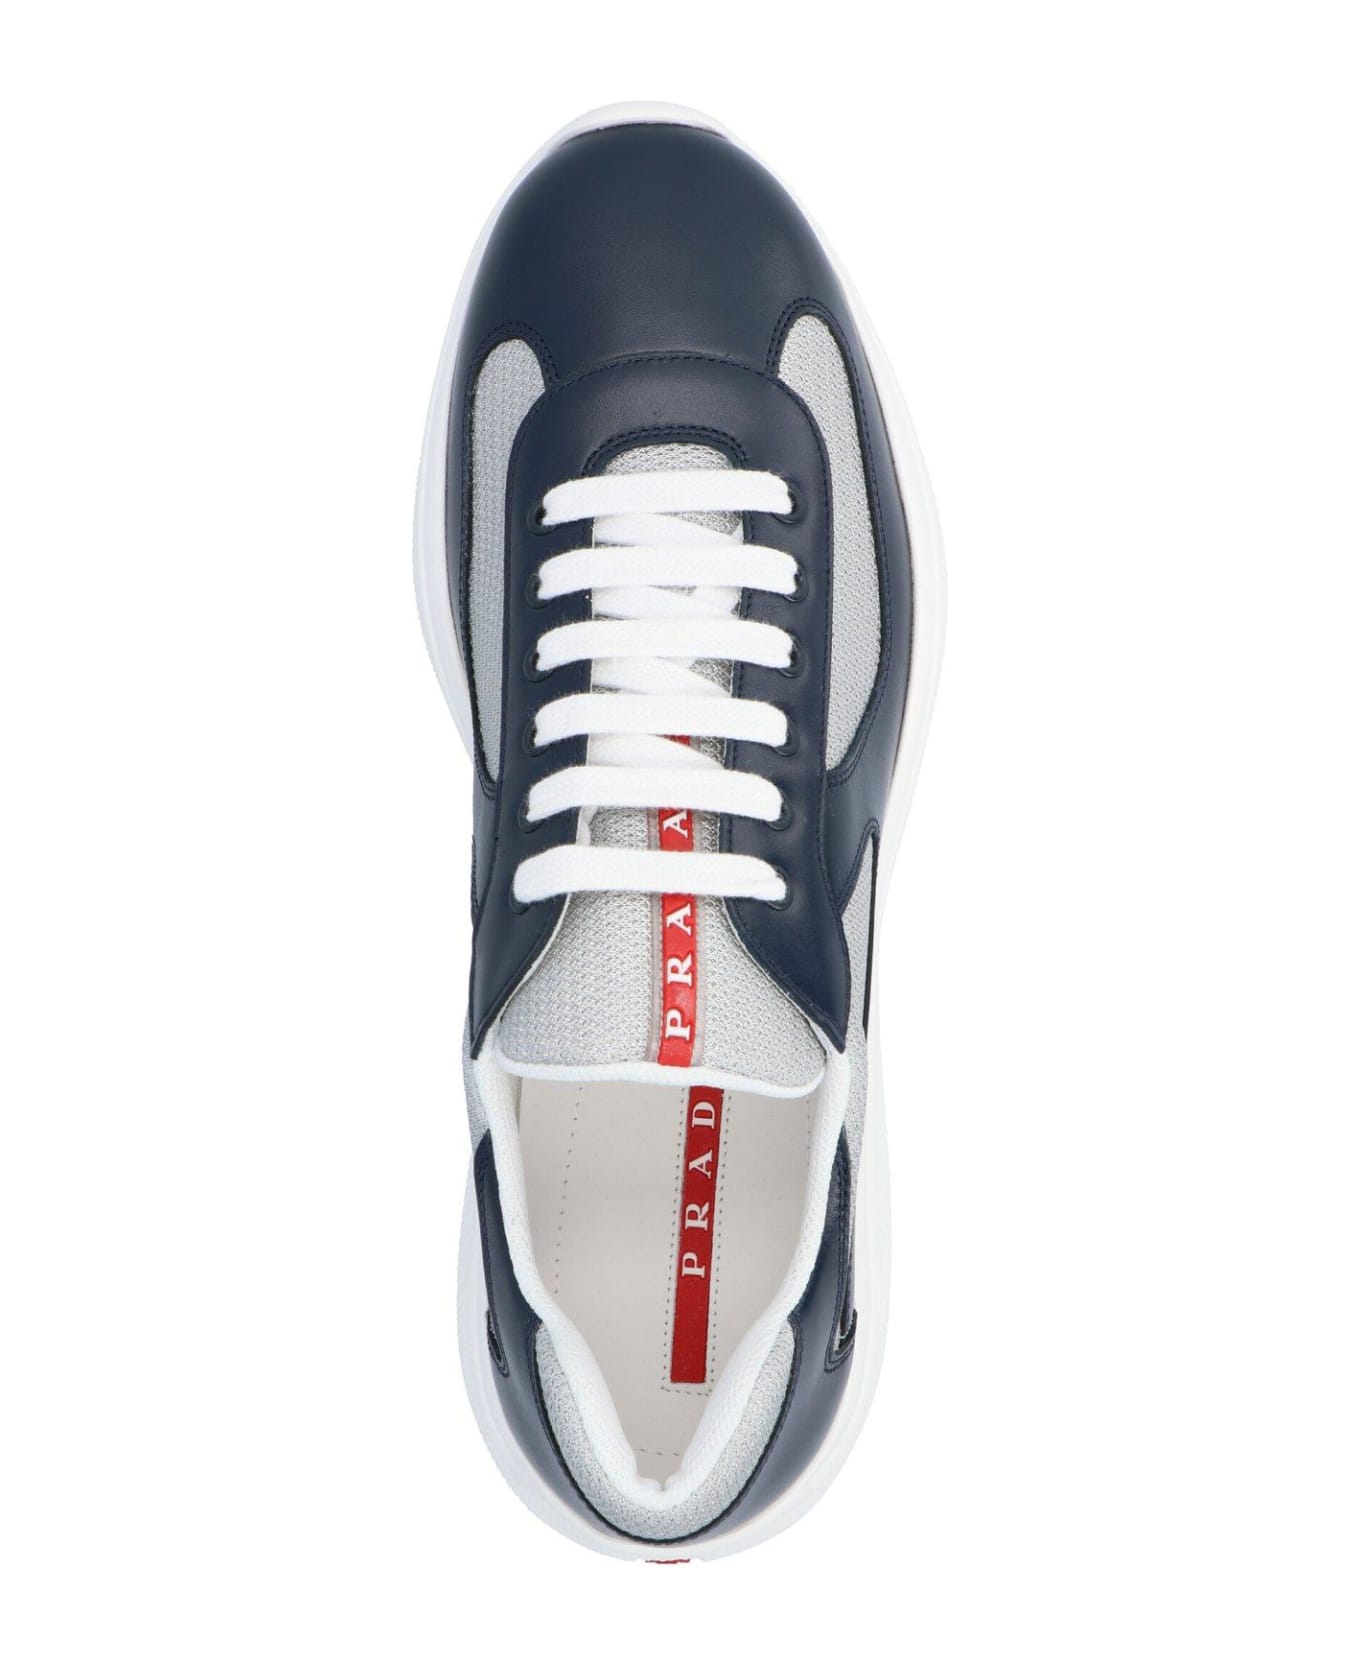 Prada America's Cup Sneakers - BLU